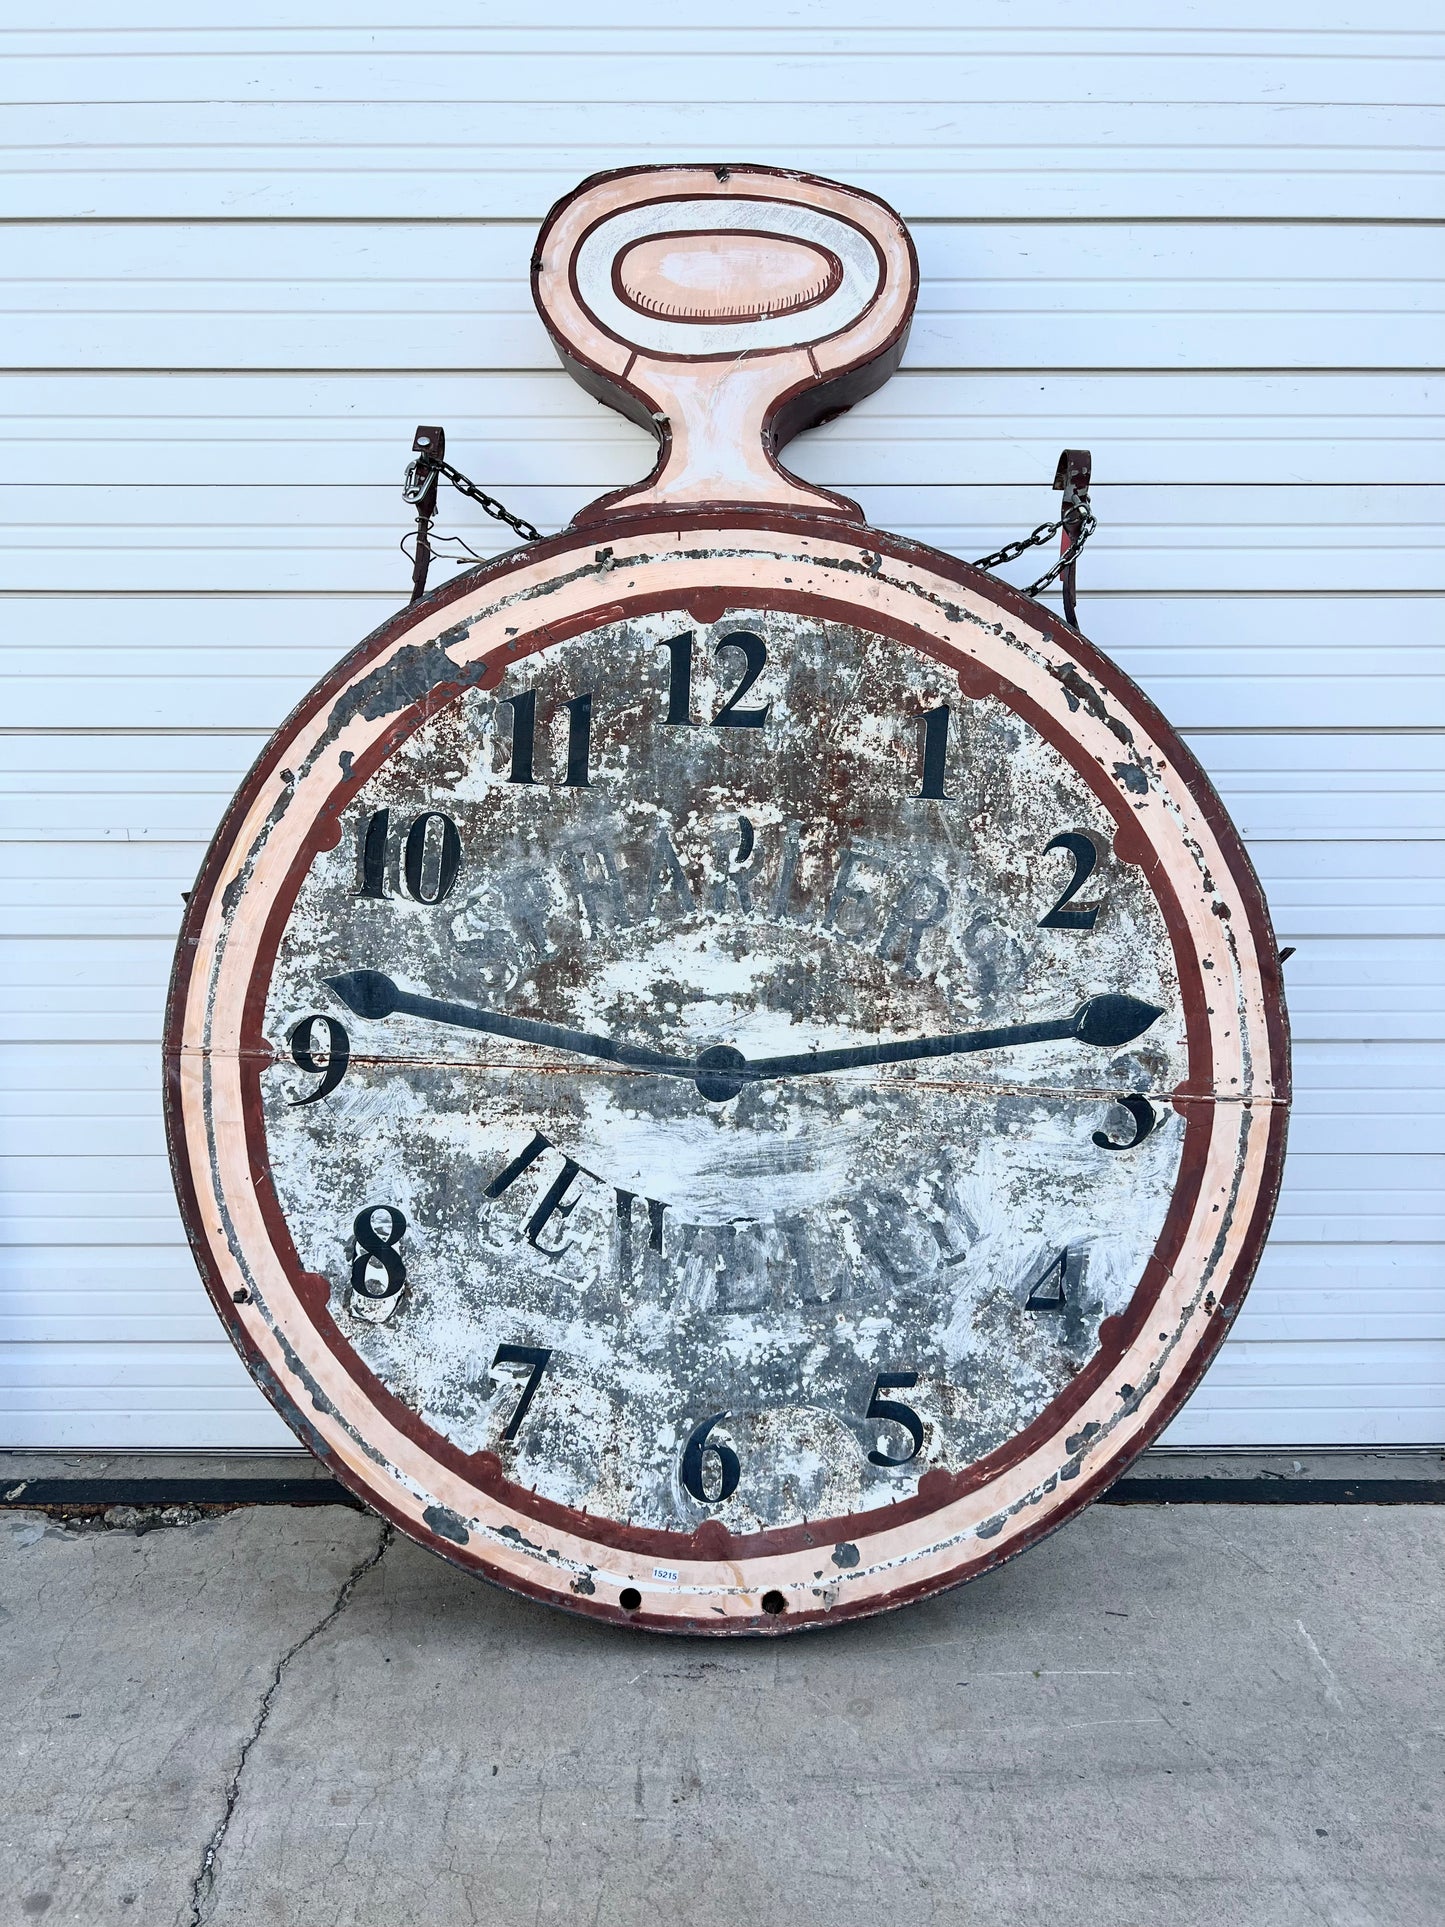 Spharler's Jewelry Clock